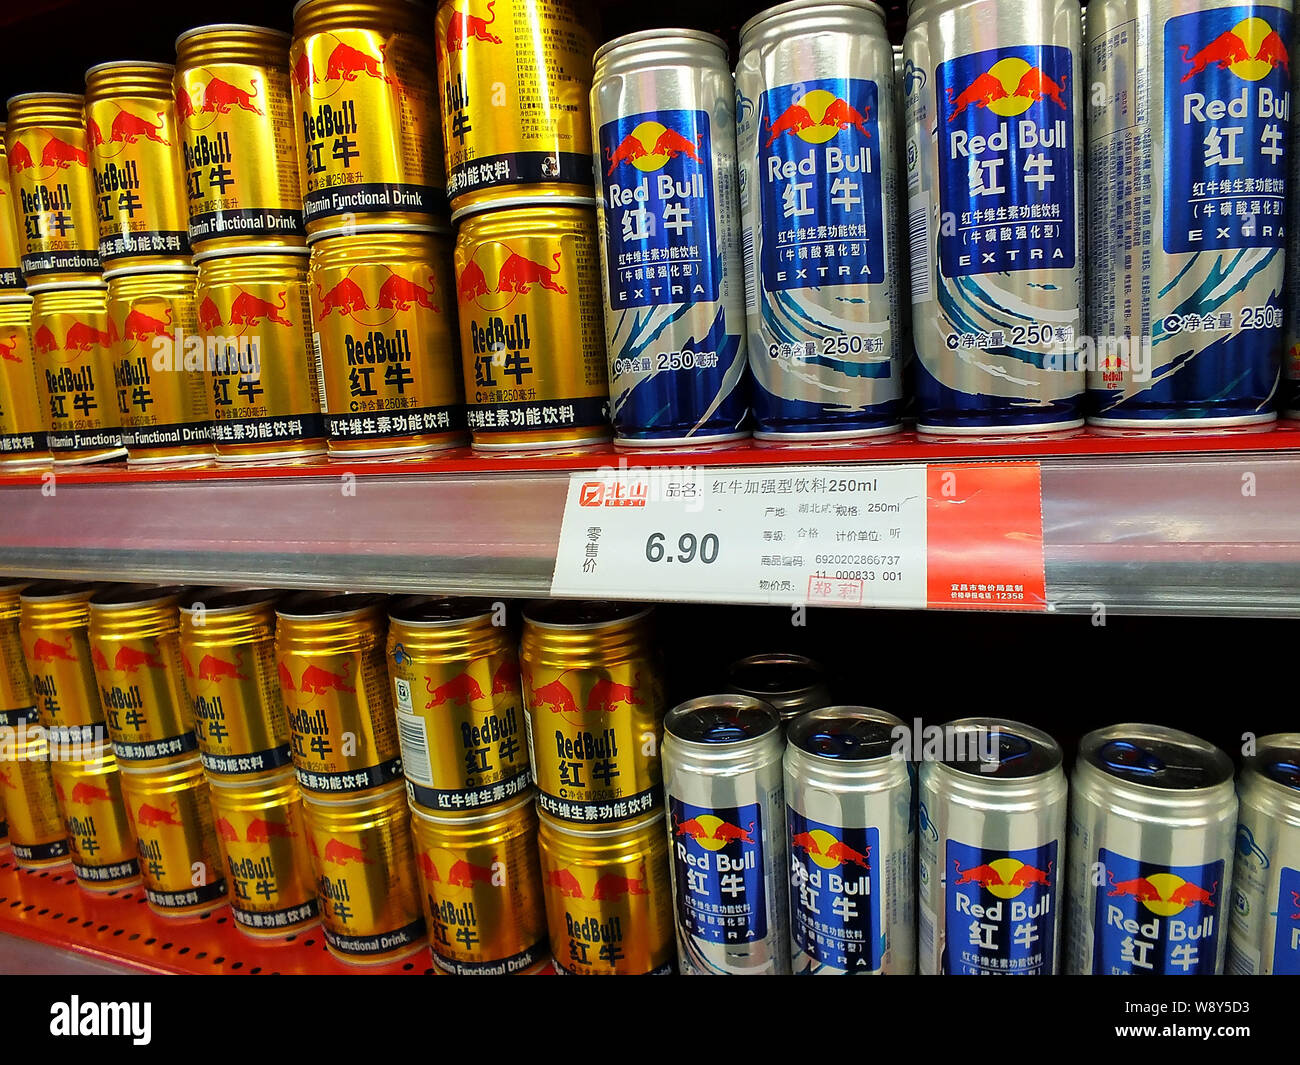 Red Bull organic simply cola coca Stock Photo - Alamy